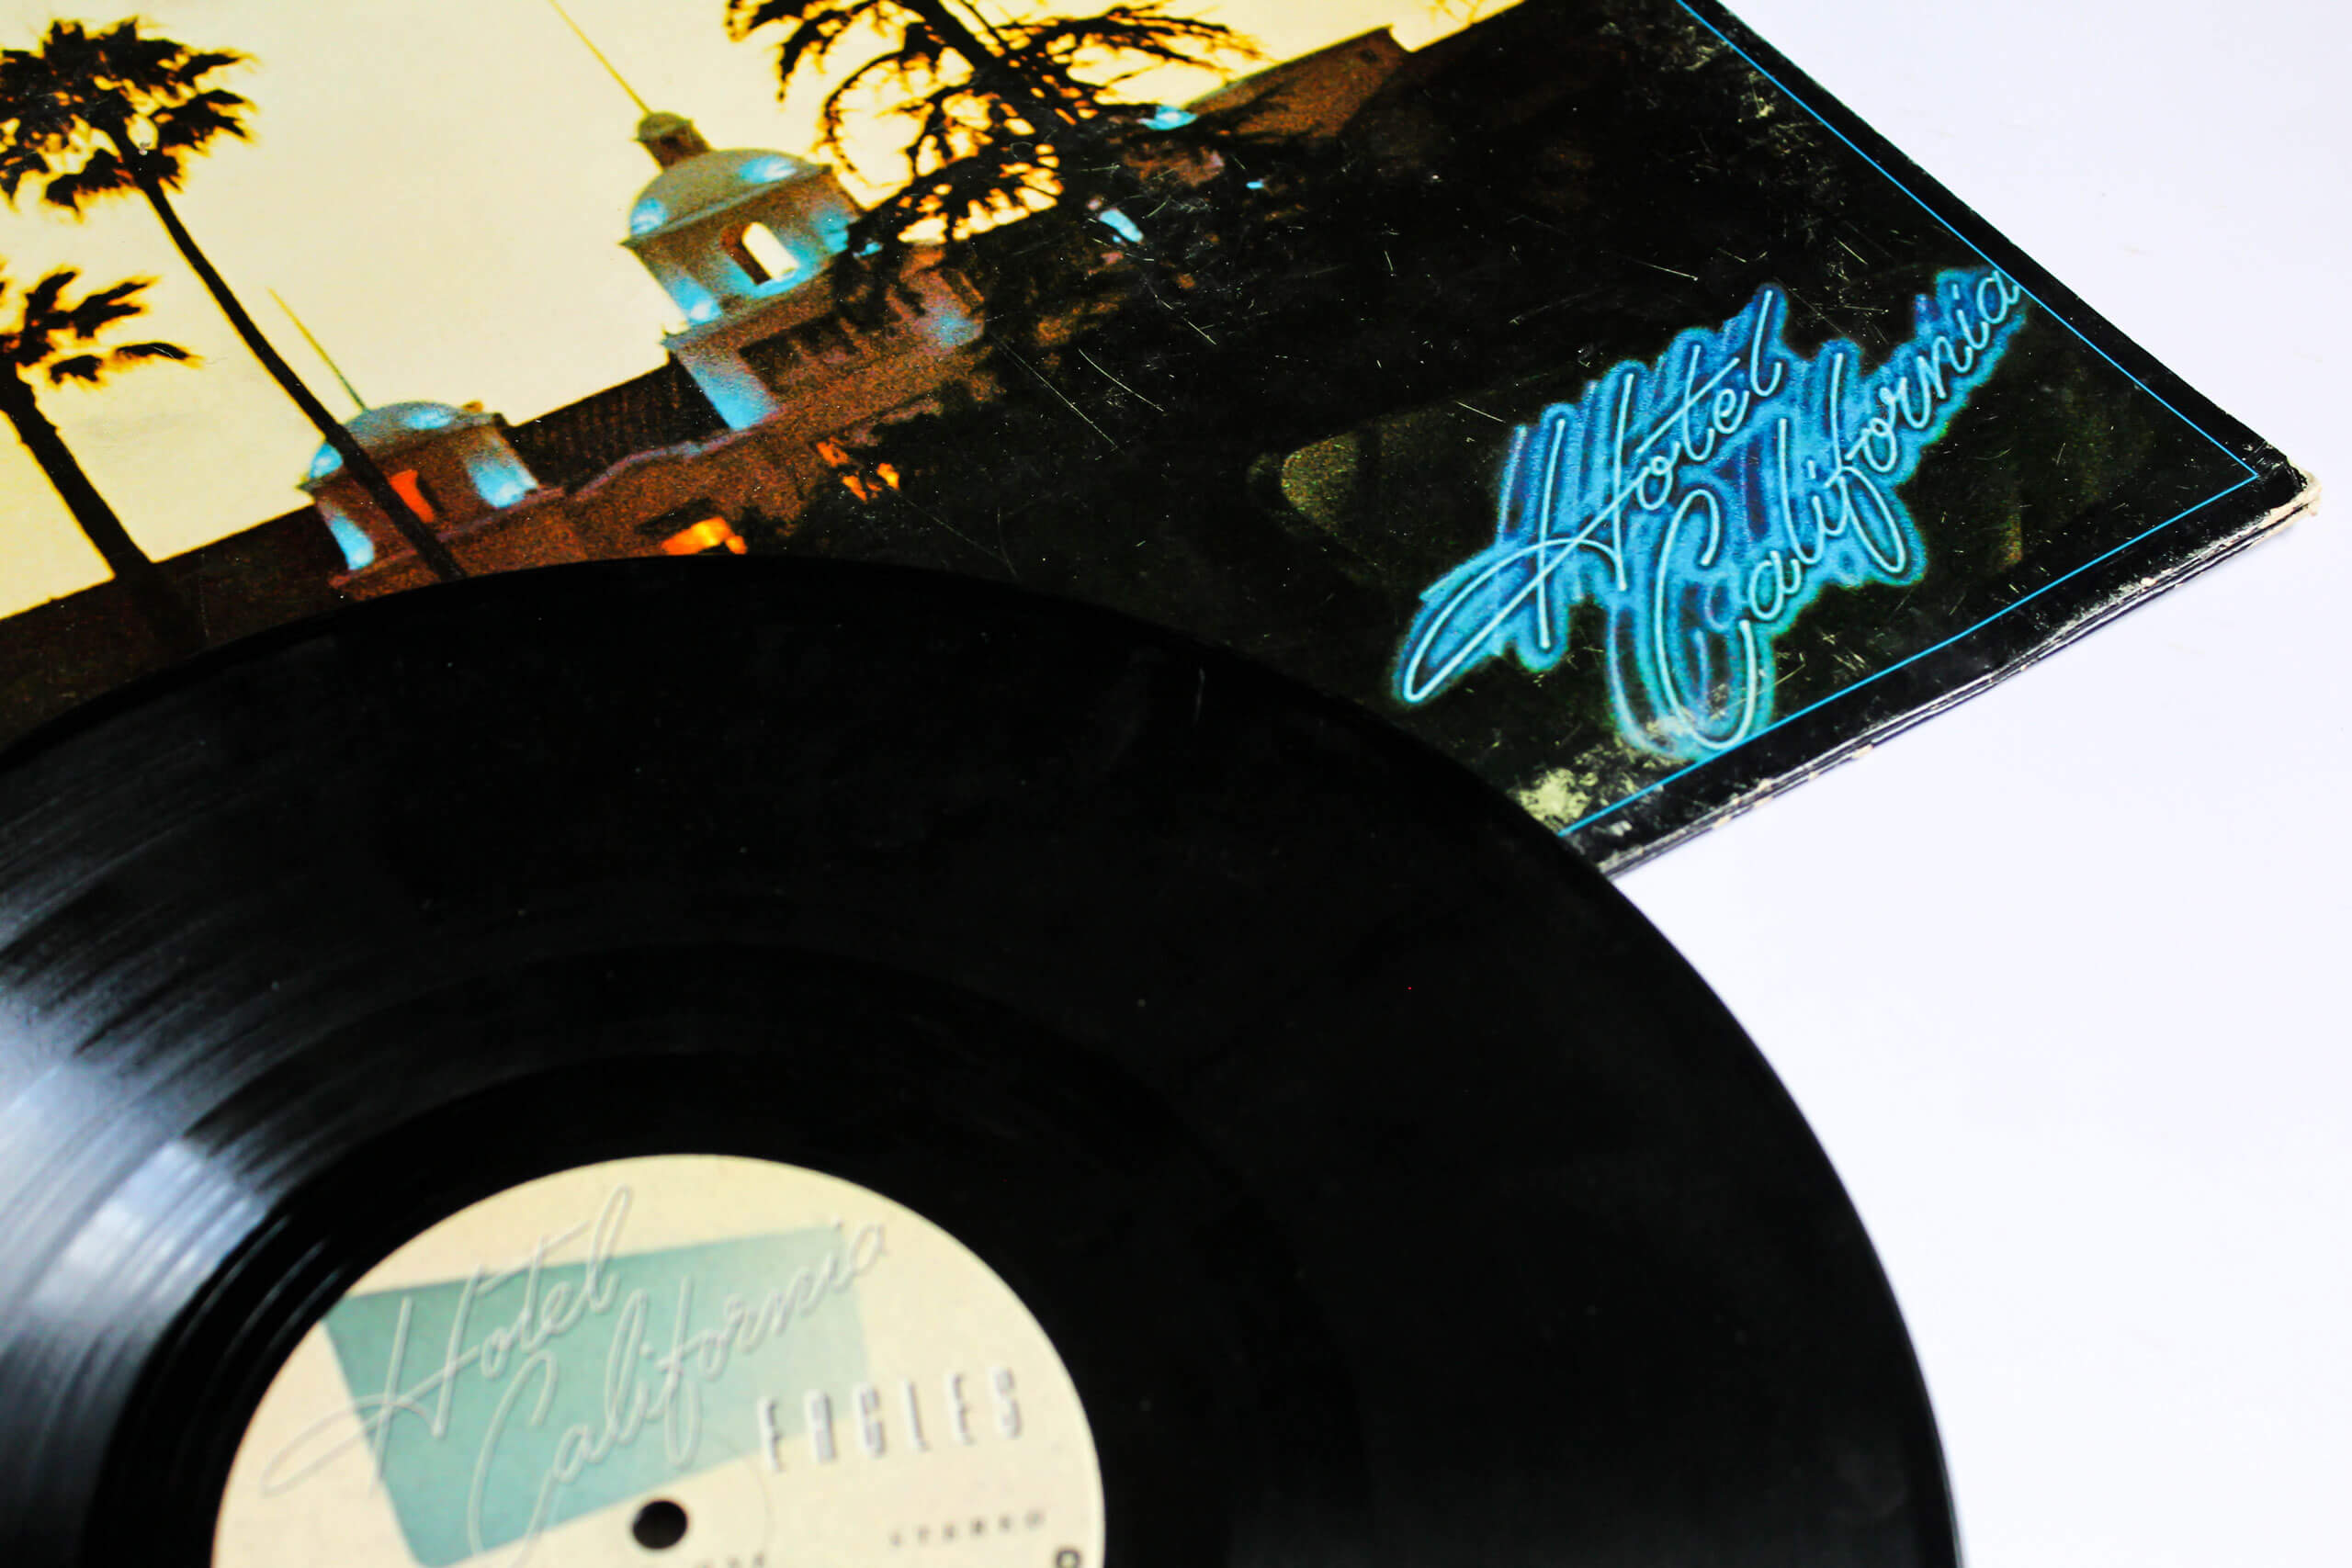 The Eagles Vinyl Record of Hotel California